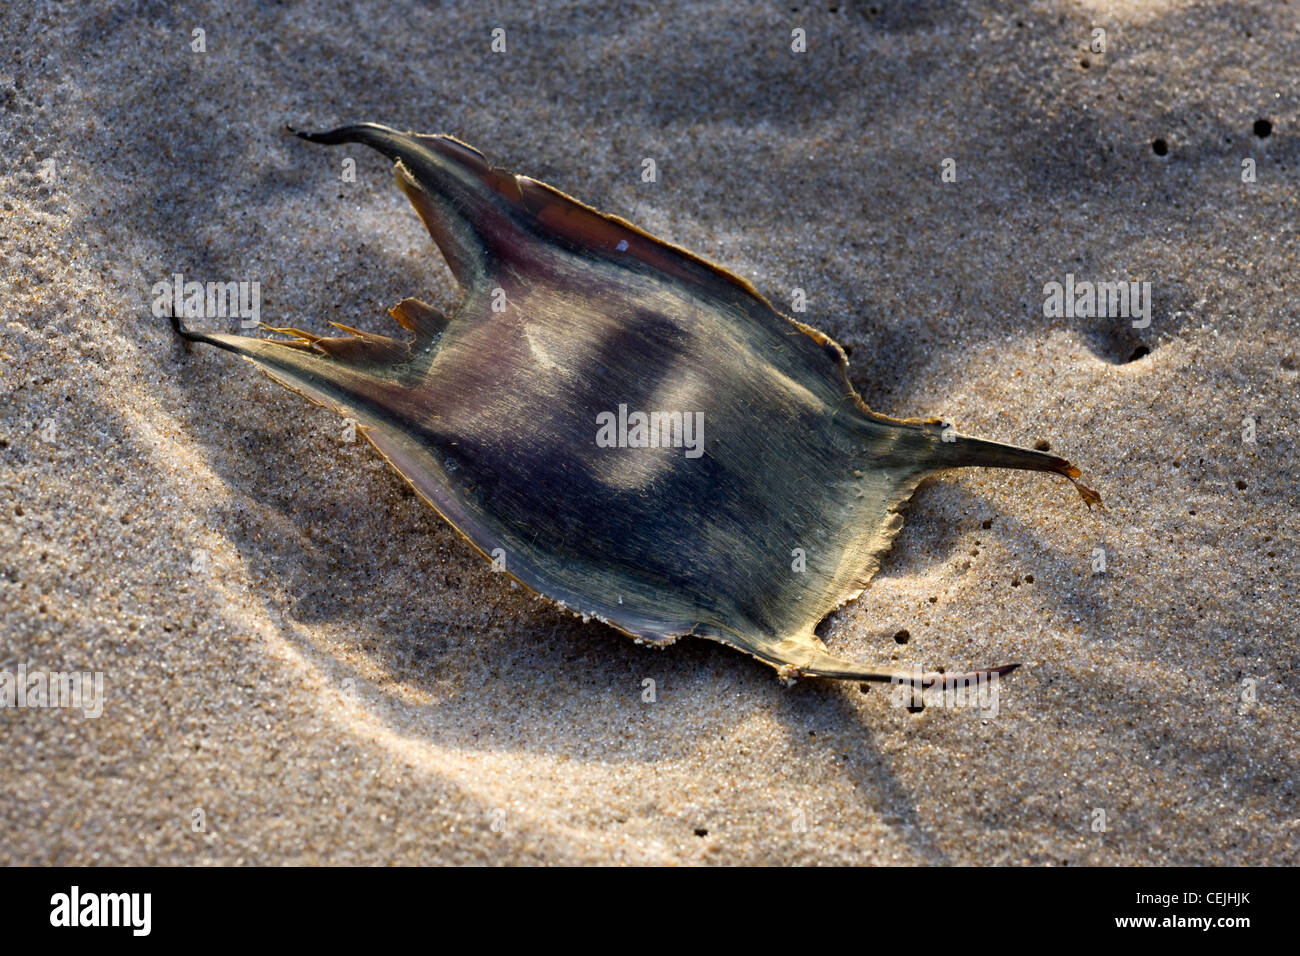 Ei-Gehäuse / Mermaid es Beutel mit einem Thornback ray / Thornback skate (Raja Clavata) am Strand, Belgien Stockfoto